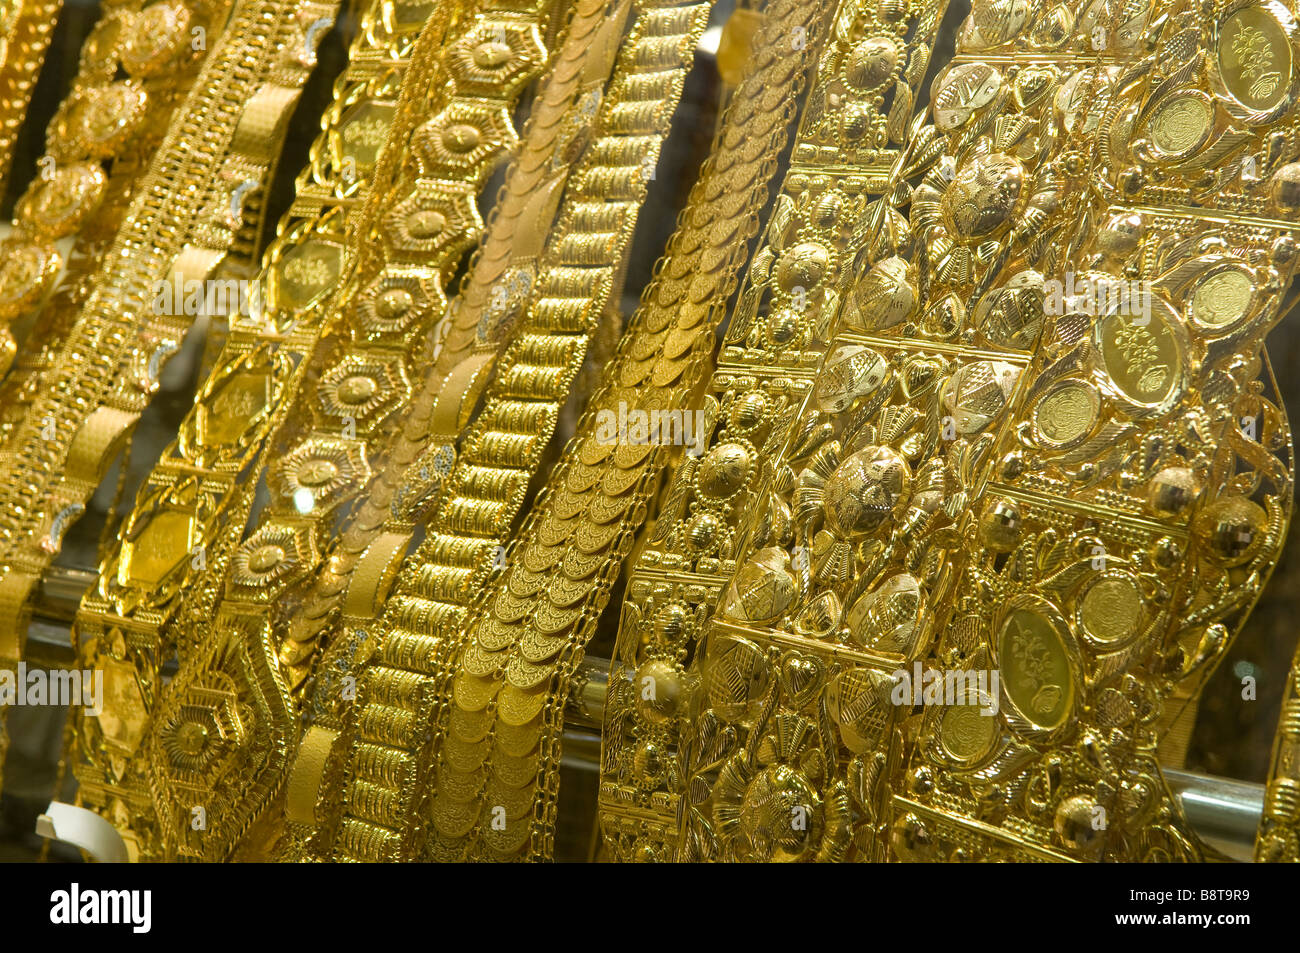 Goldkette dubai -Fotos und -Bildmaterial in hoher Auflösung – Alamy